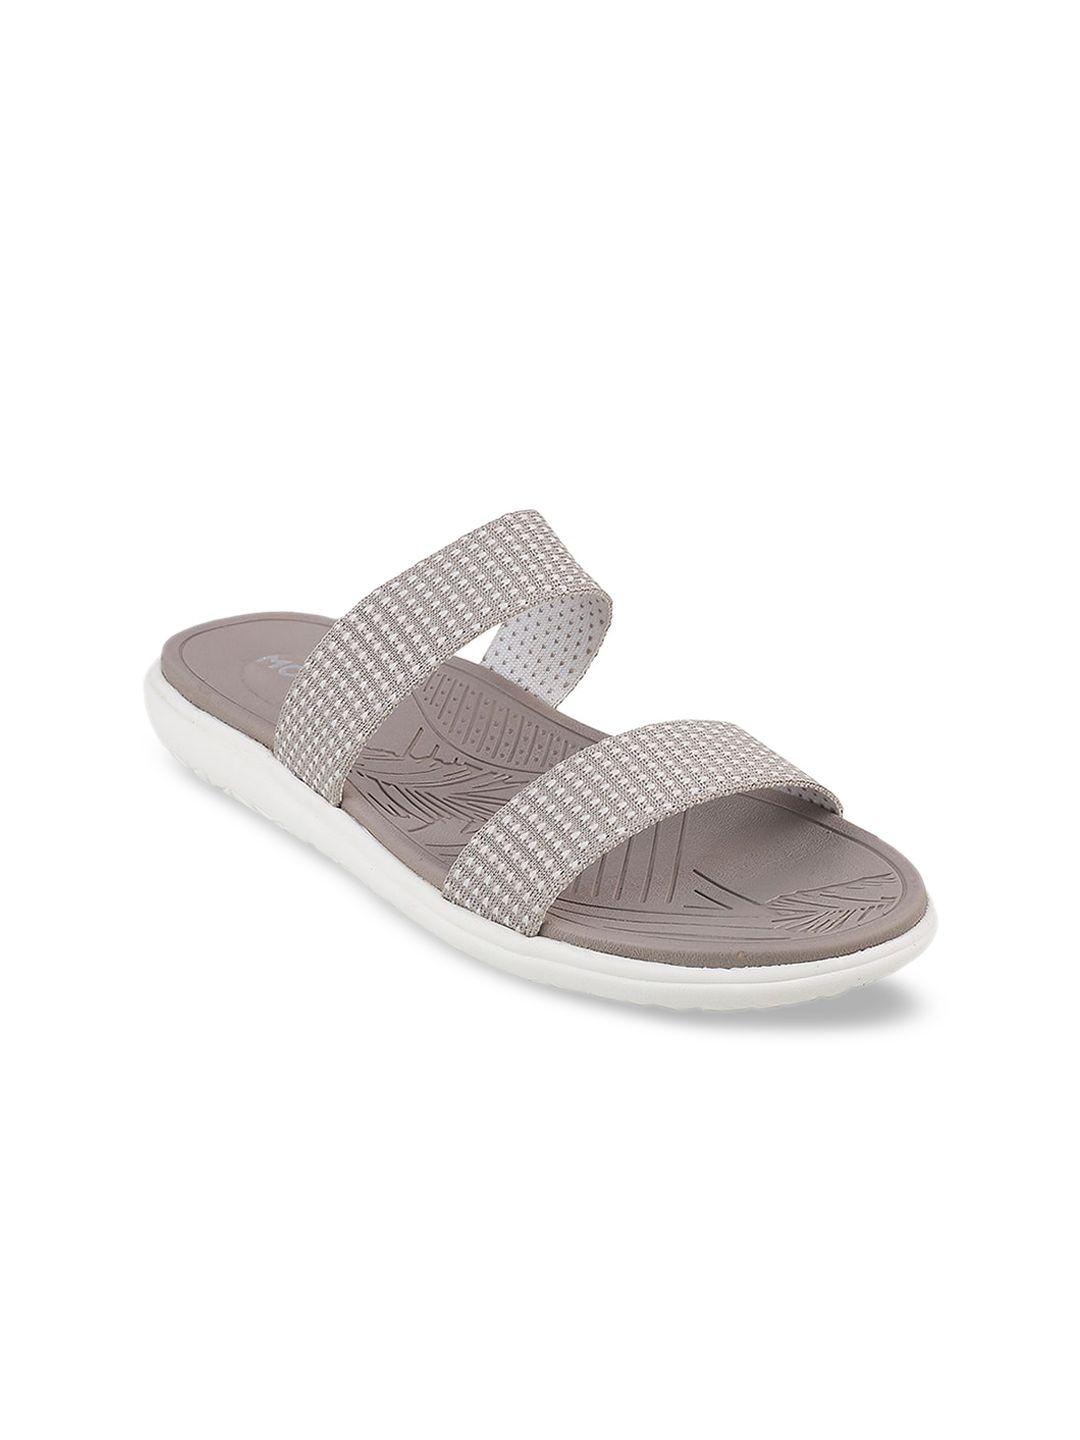 mochi women grey woven design sandals